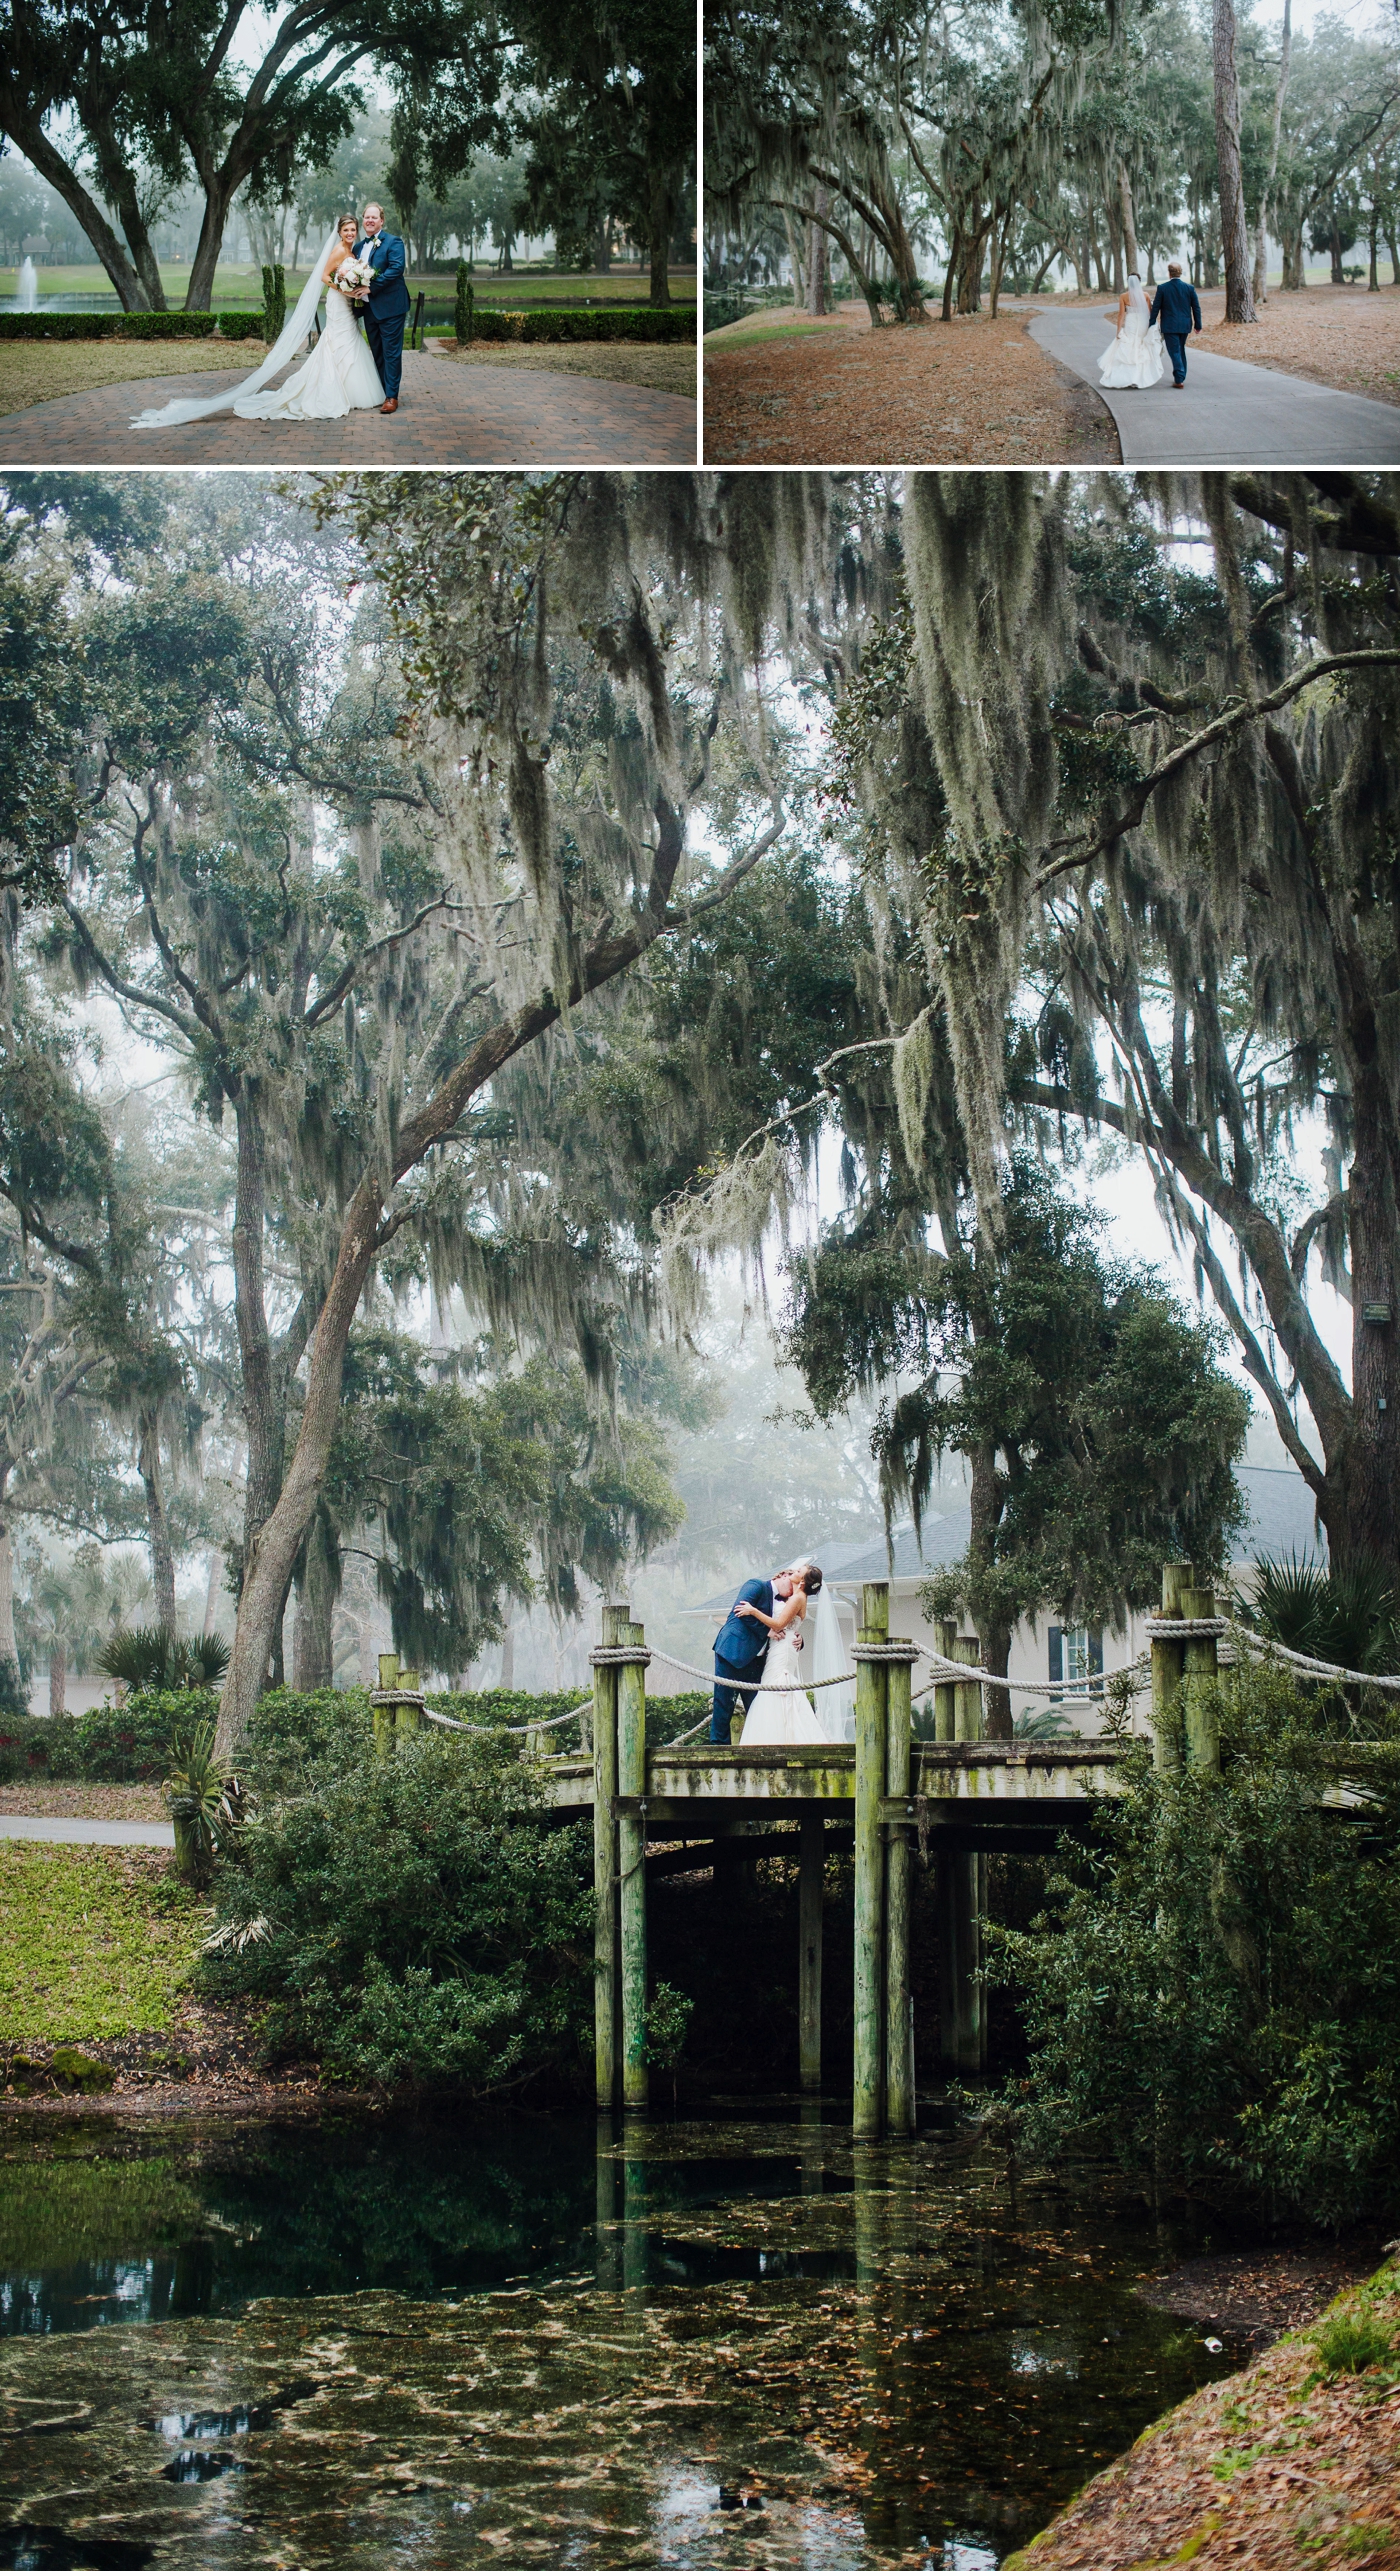 Lindsey and Matt’s wedding at The Plantation Club at The Landings in Savannah, Georgia | Izzy Hudgins Photography